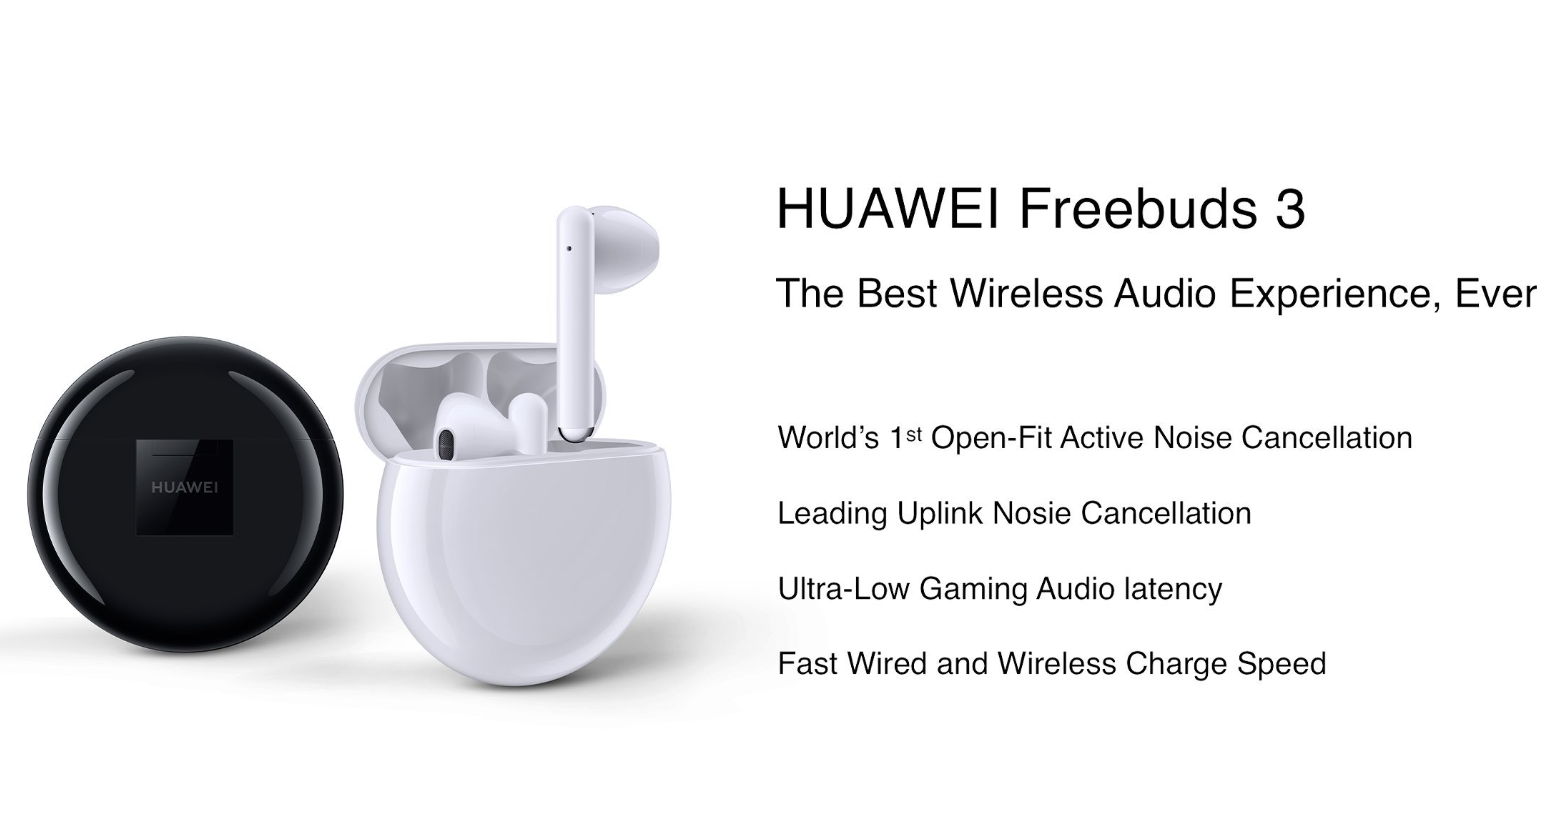  Huawei juga meluncurkan sepasang earbud nirkabel baru, Freebuds 3